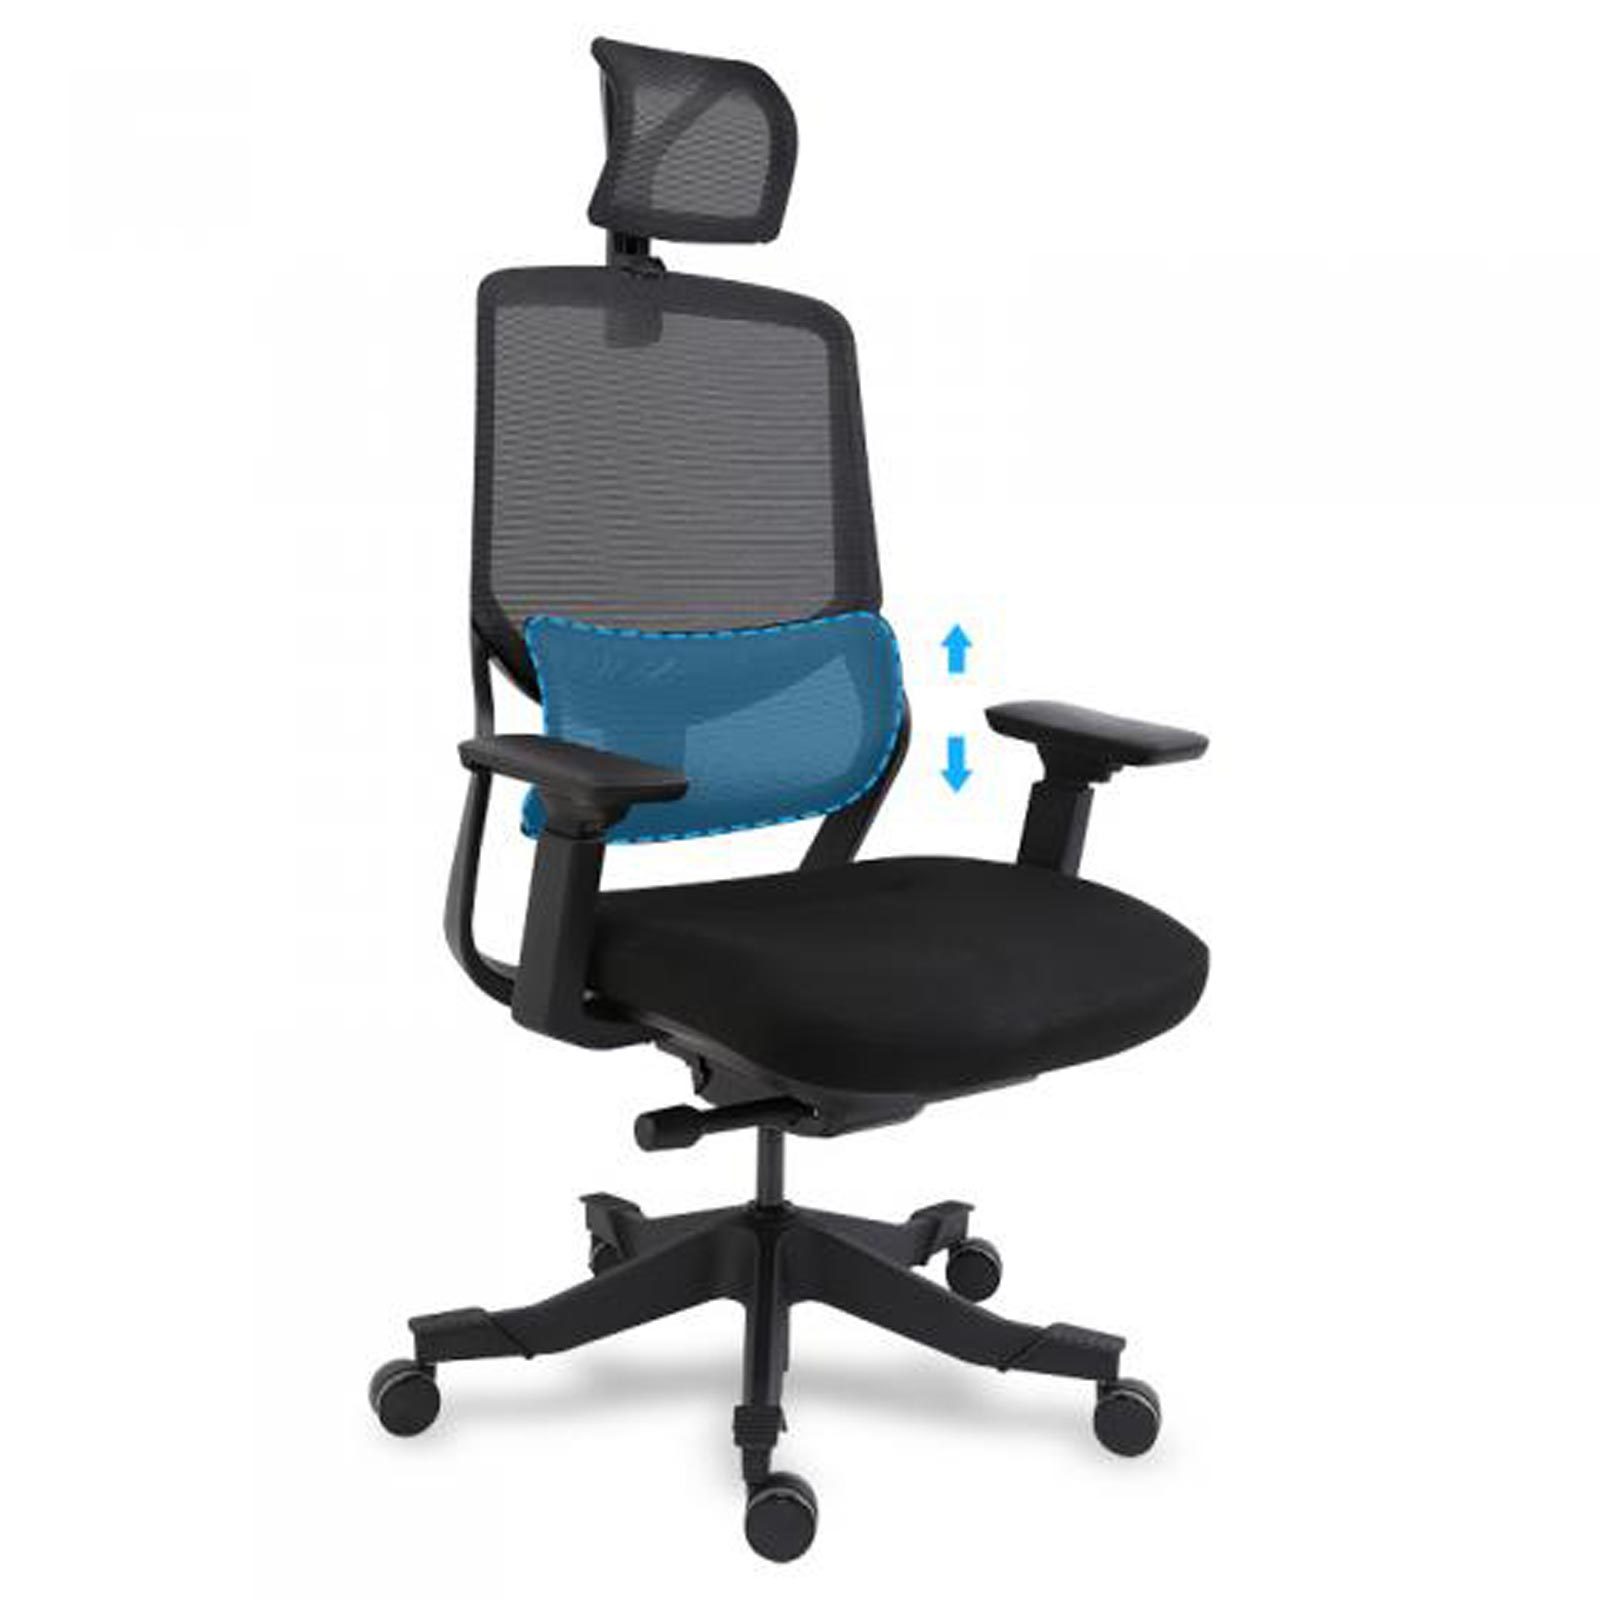 For the mom boss: Flexispot Soutien Ergonomic Office Chair